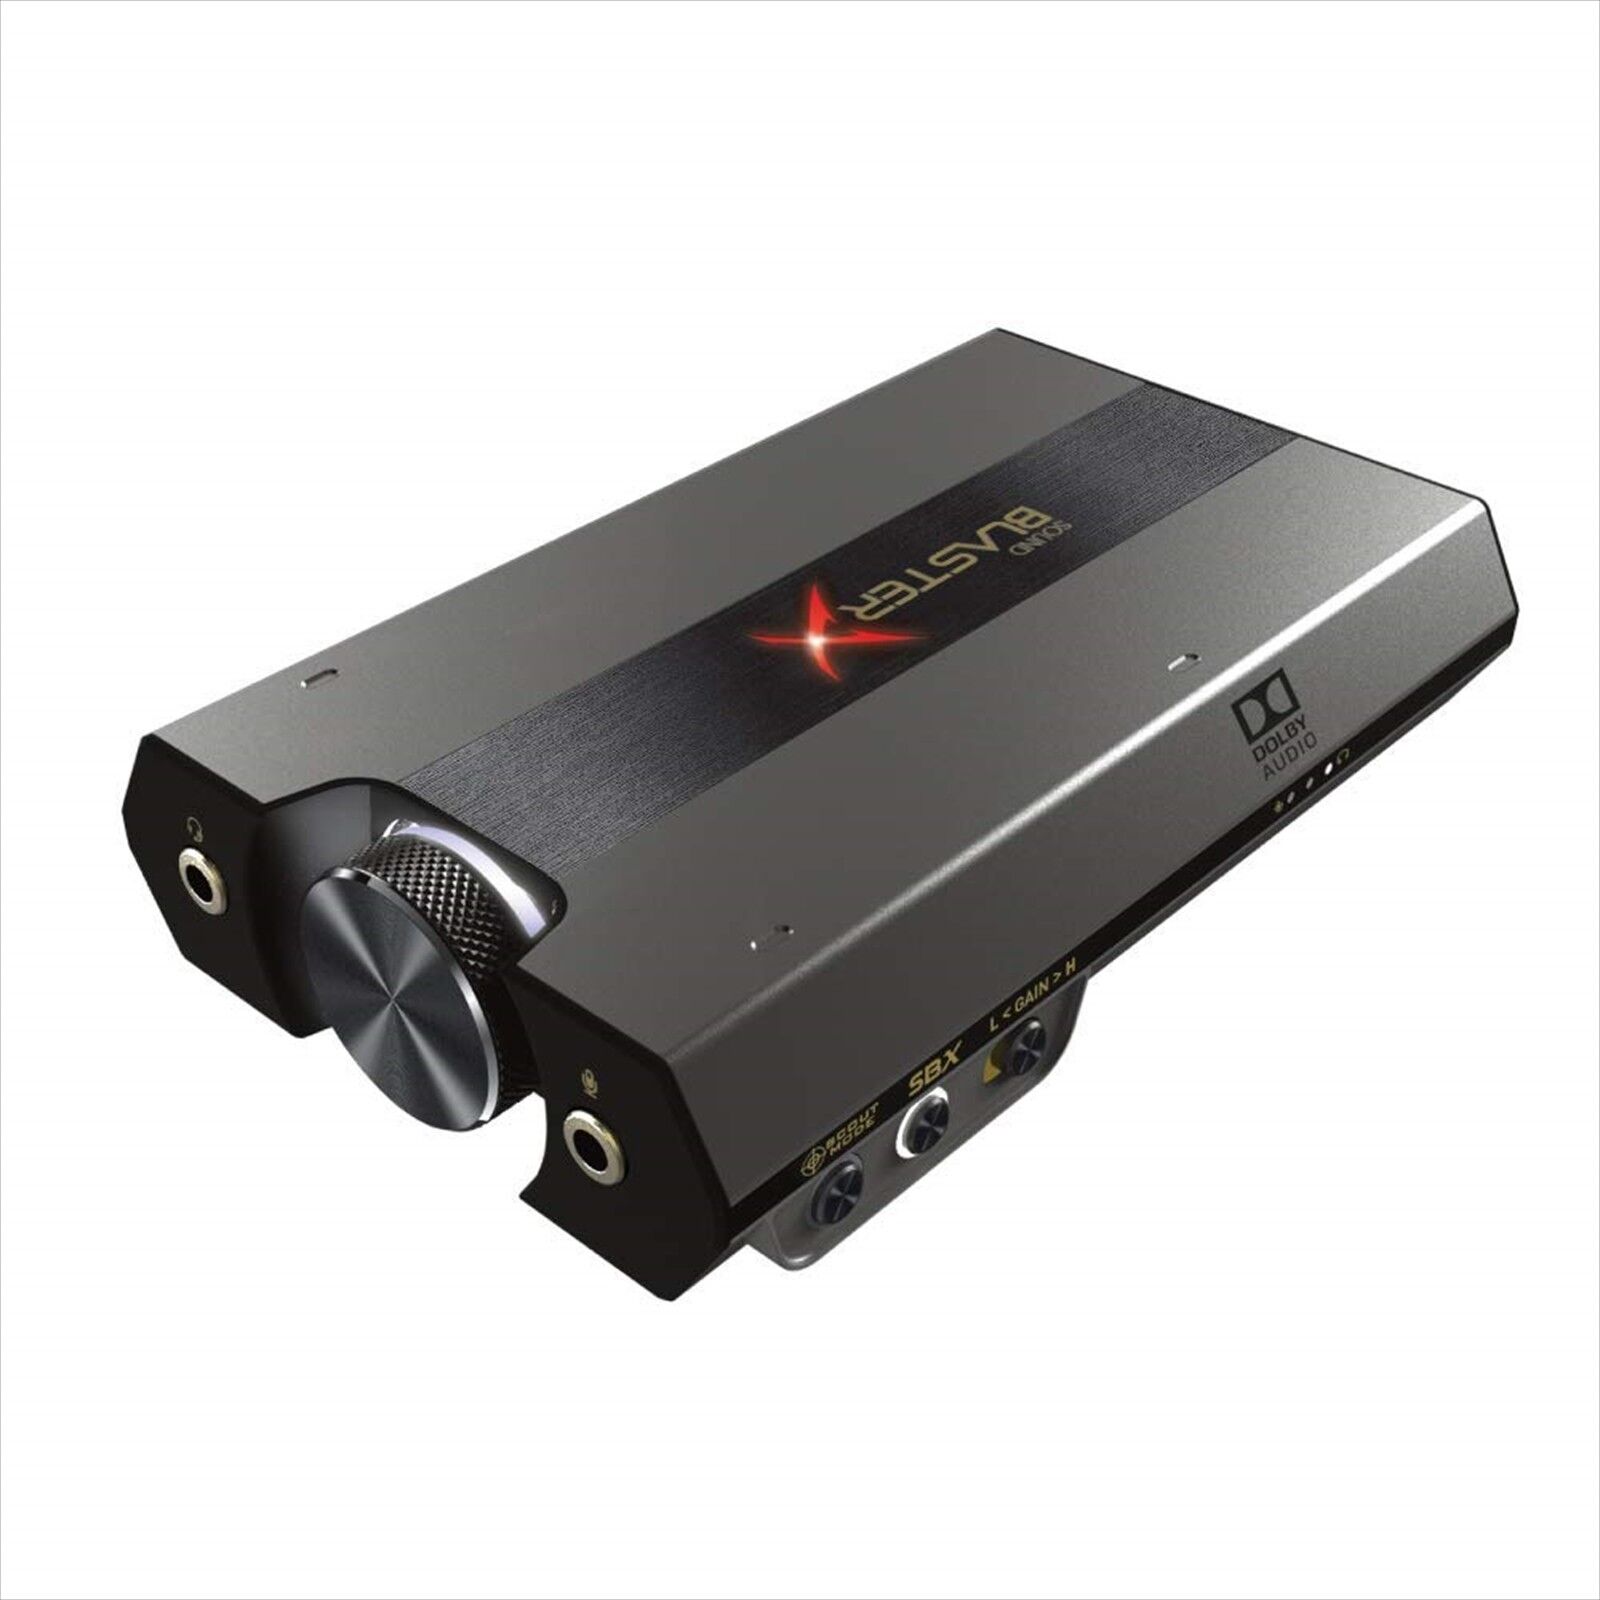 Creative Sound BlasterX G6 Portable USB DAC For PC / Headphone F/S NEW